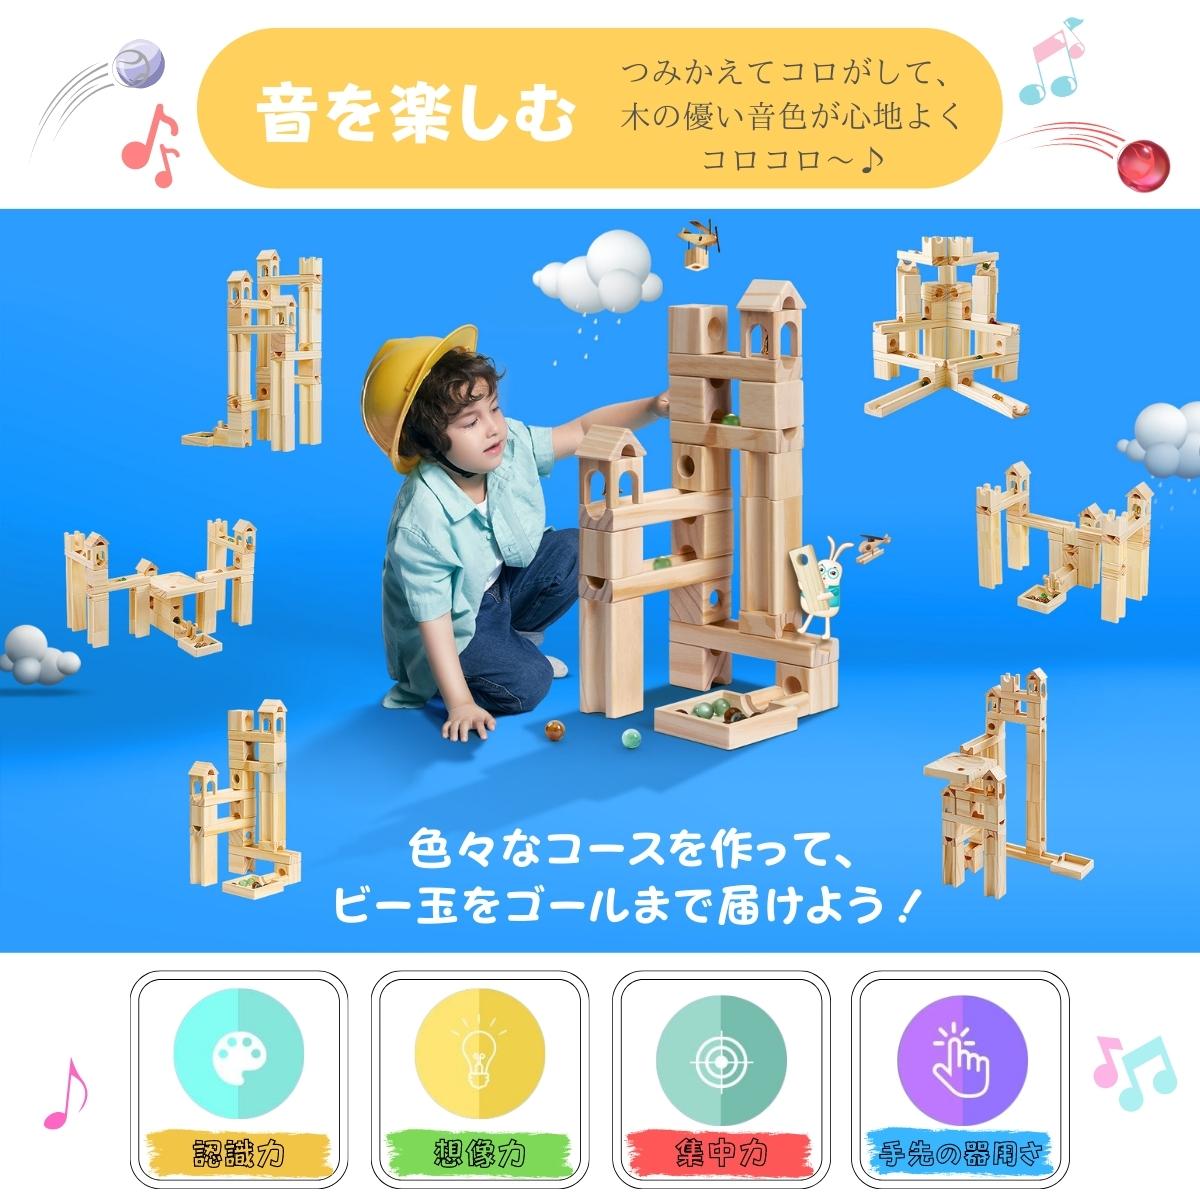 tanoshimu 知育玩具 積み木 おもちゃ ビー玉転がし 木製 ブロック 出産